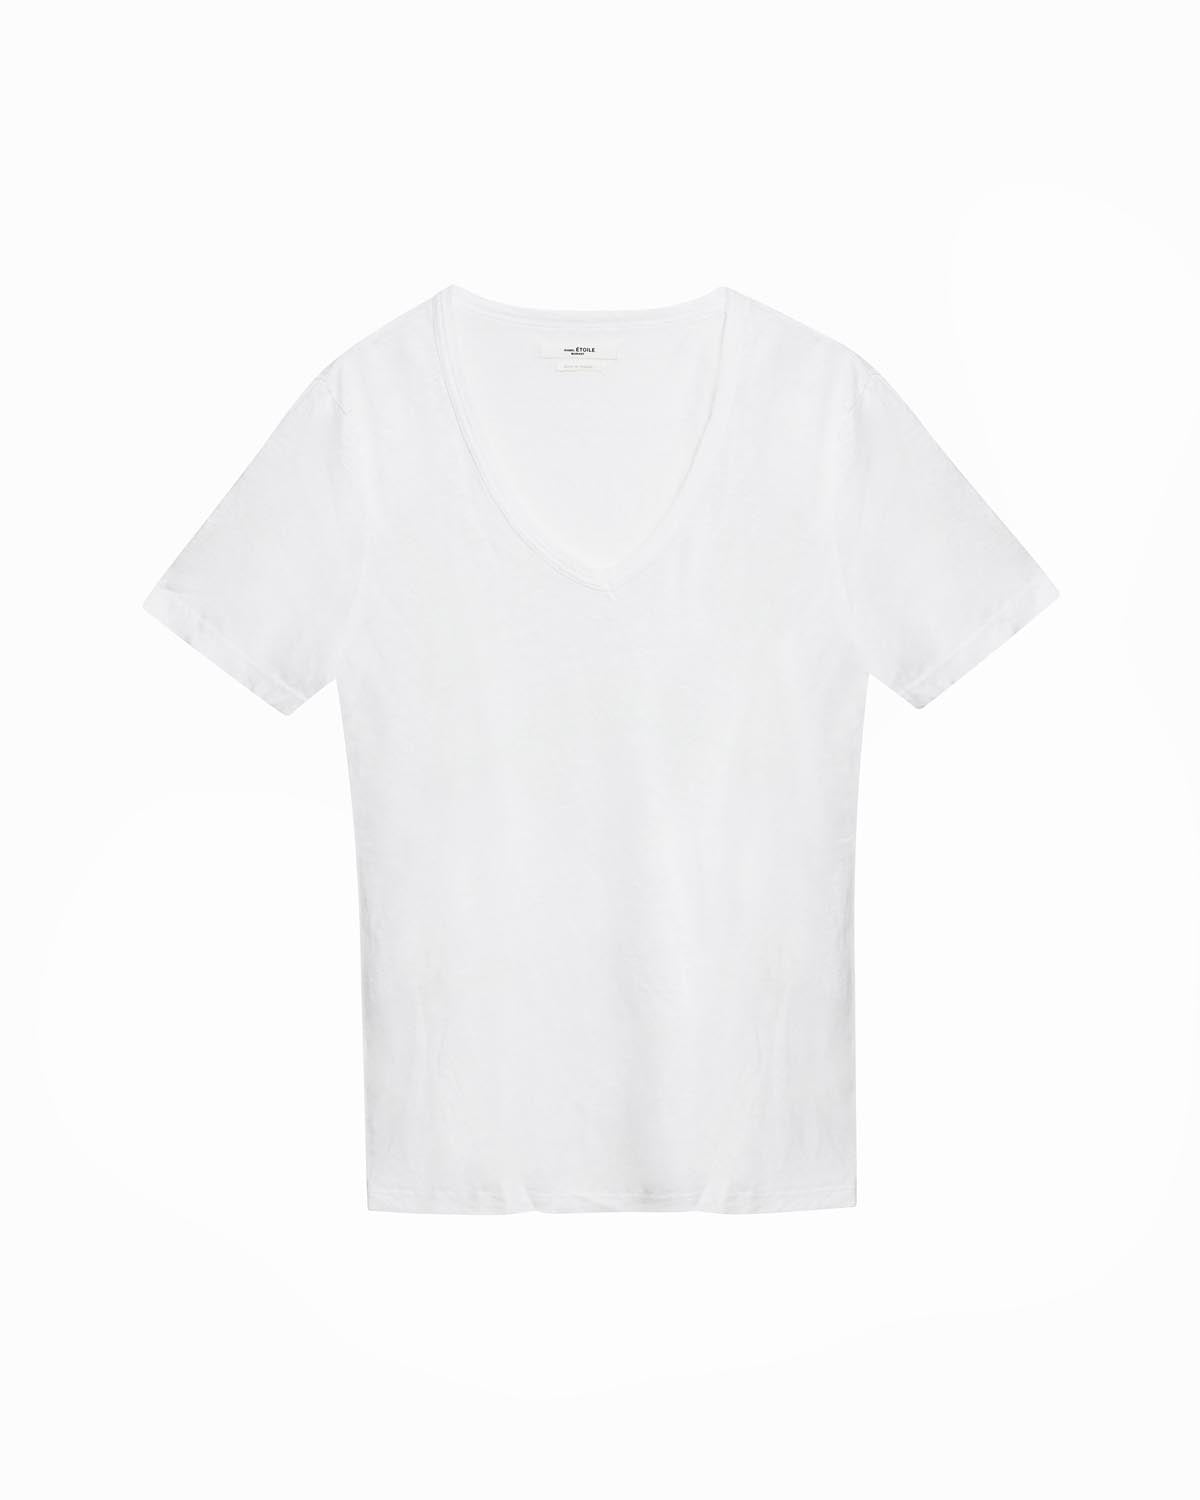 Kranger ティーシャツ Woman 白 1